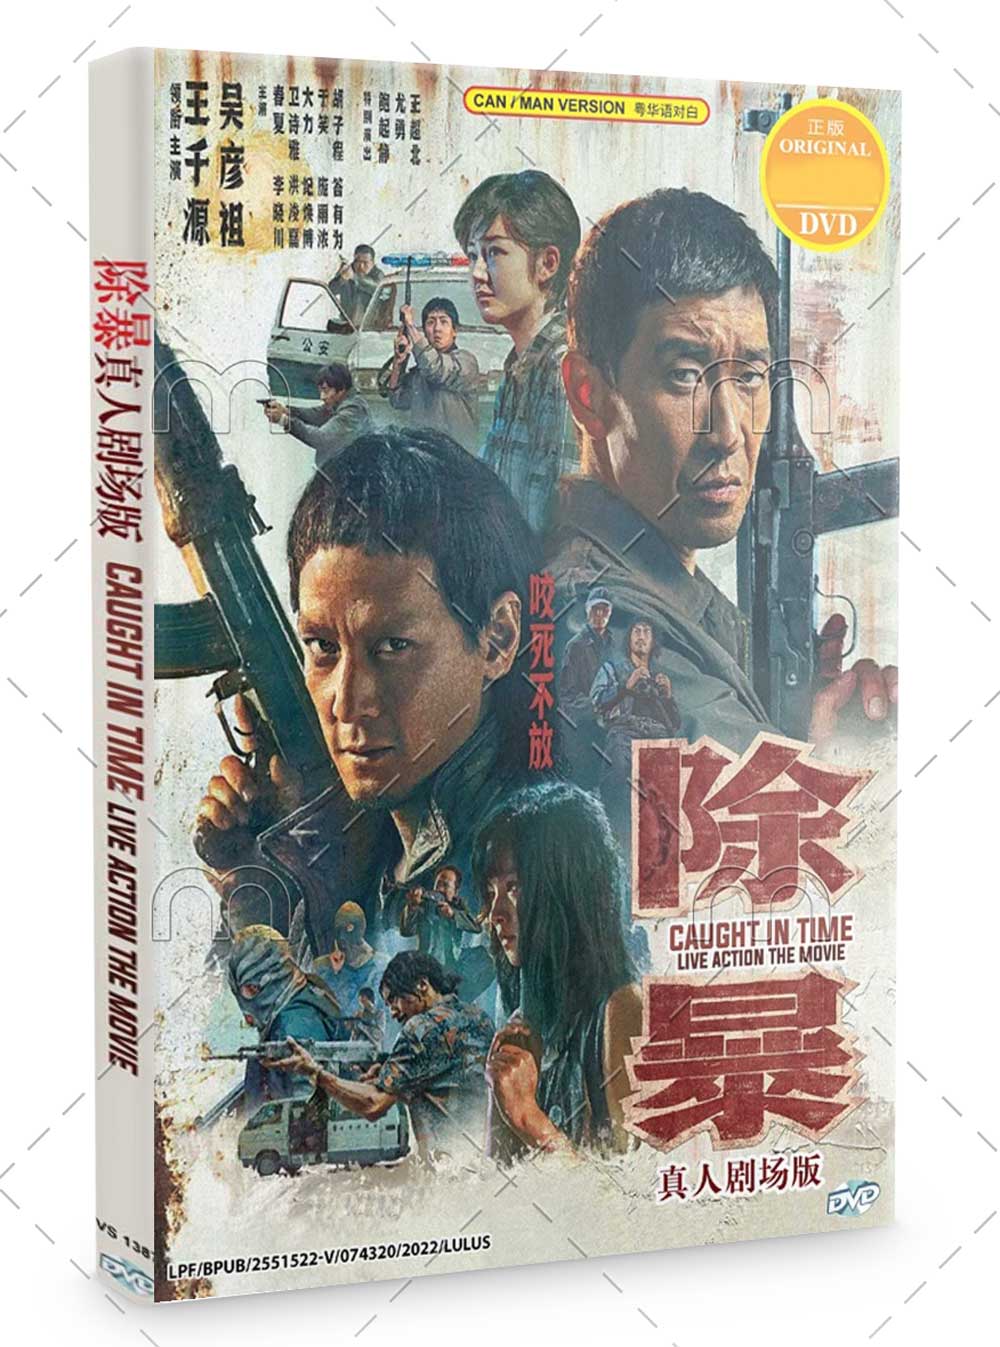 Caught In Time (DVD) (2020) 香港映画